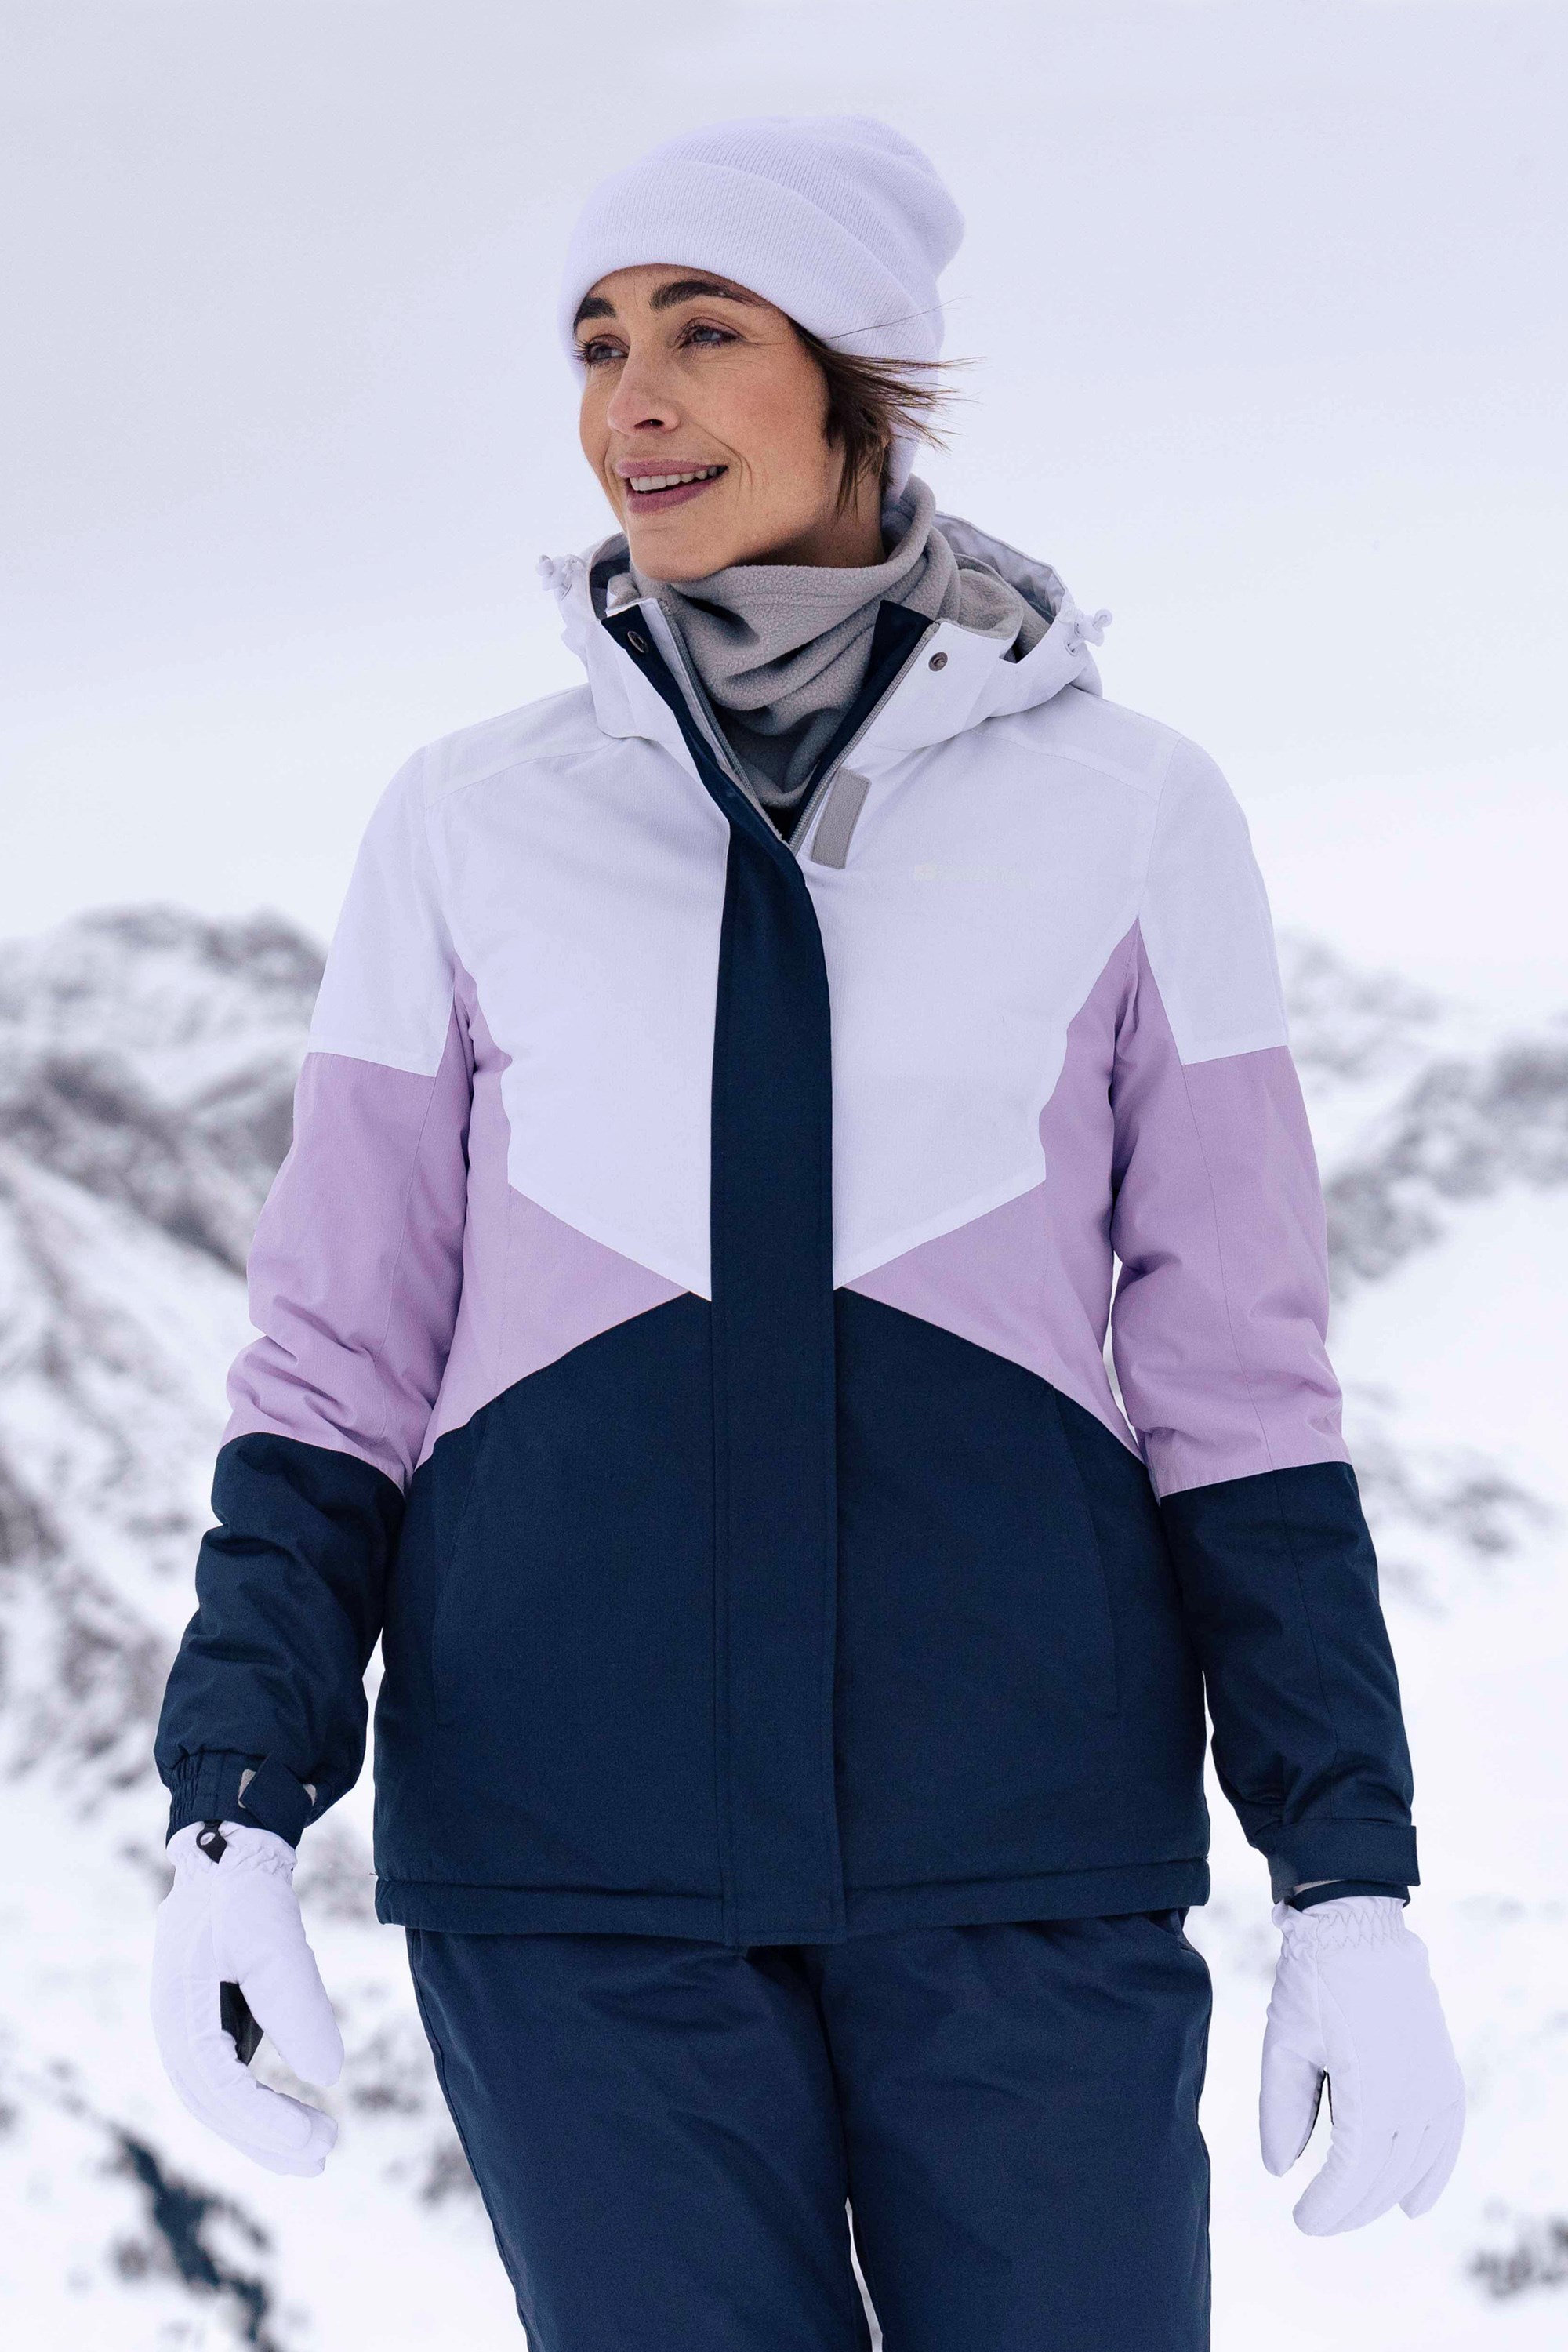 https://img.cdn.mountainwarehouse.com/product/060897/060897_lil_moon_ii_womens_ski_jacket_ecom_lifestyle_aw23_01.jpg